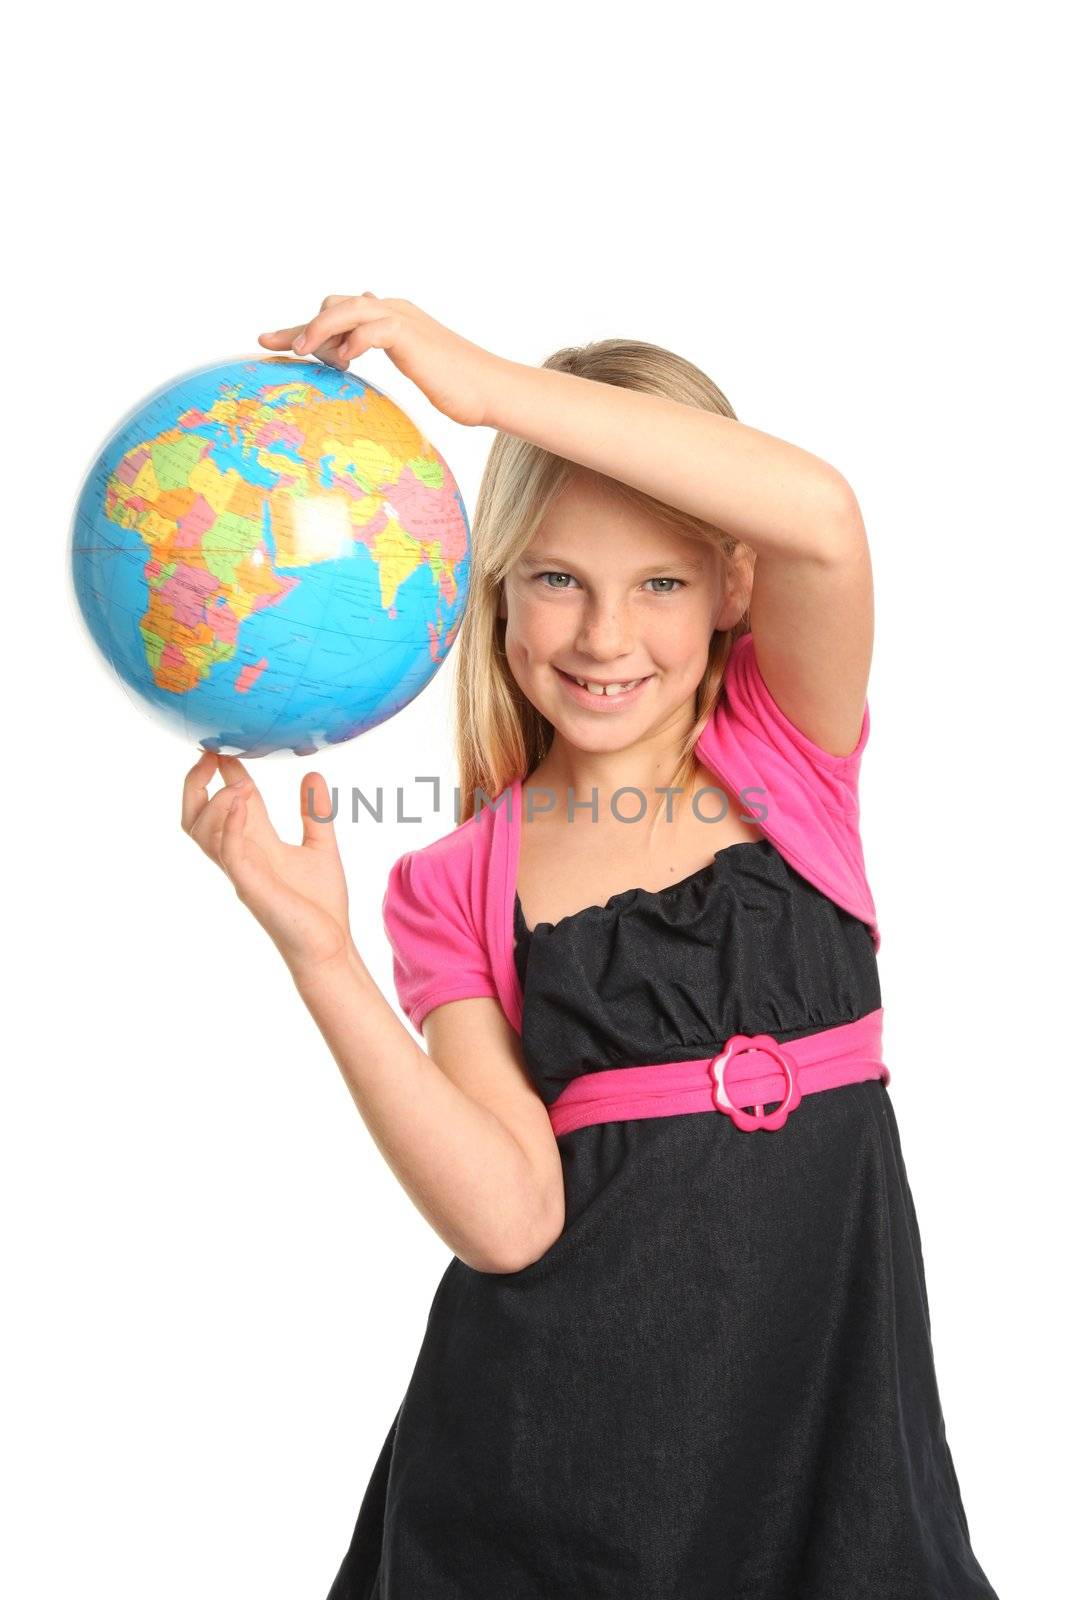 Preteen Girl Holding World Globe by fouroaks